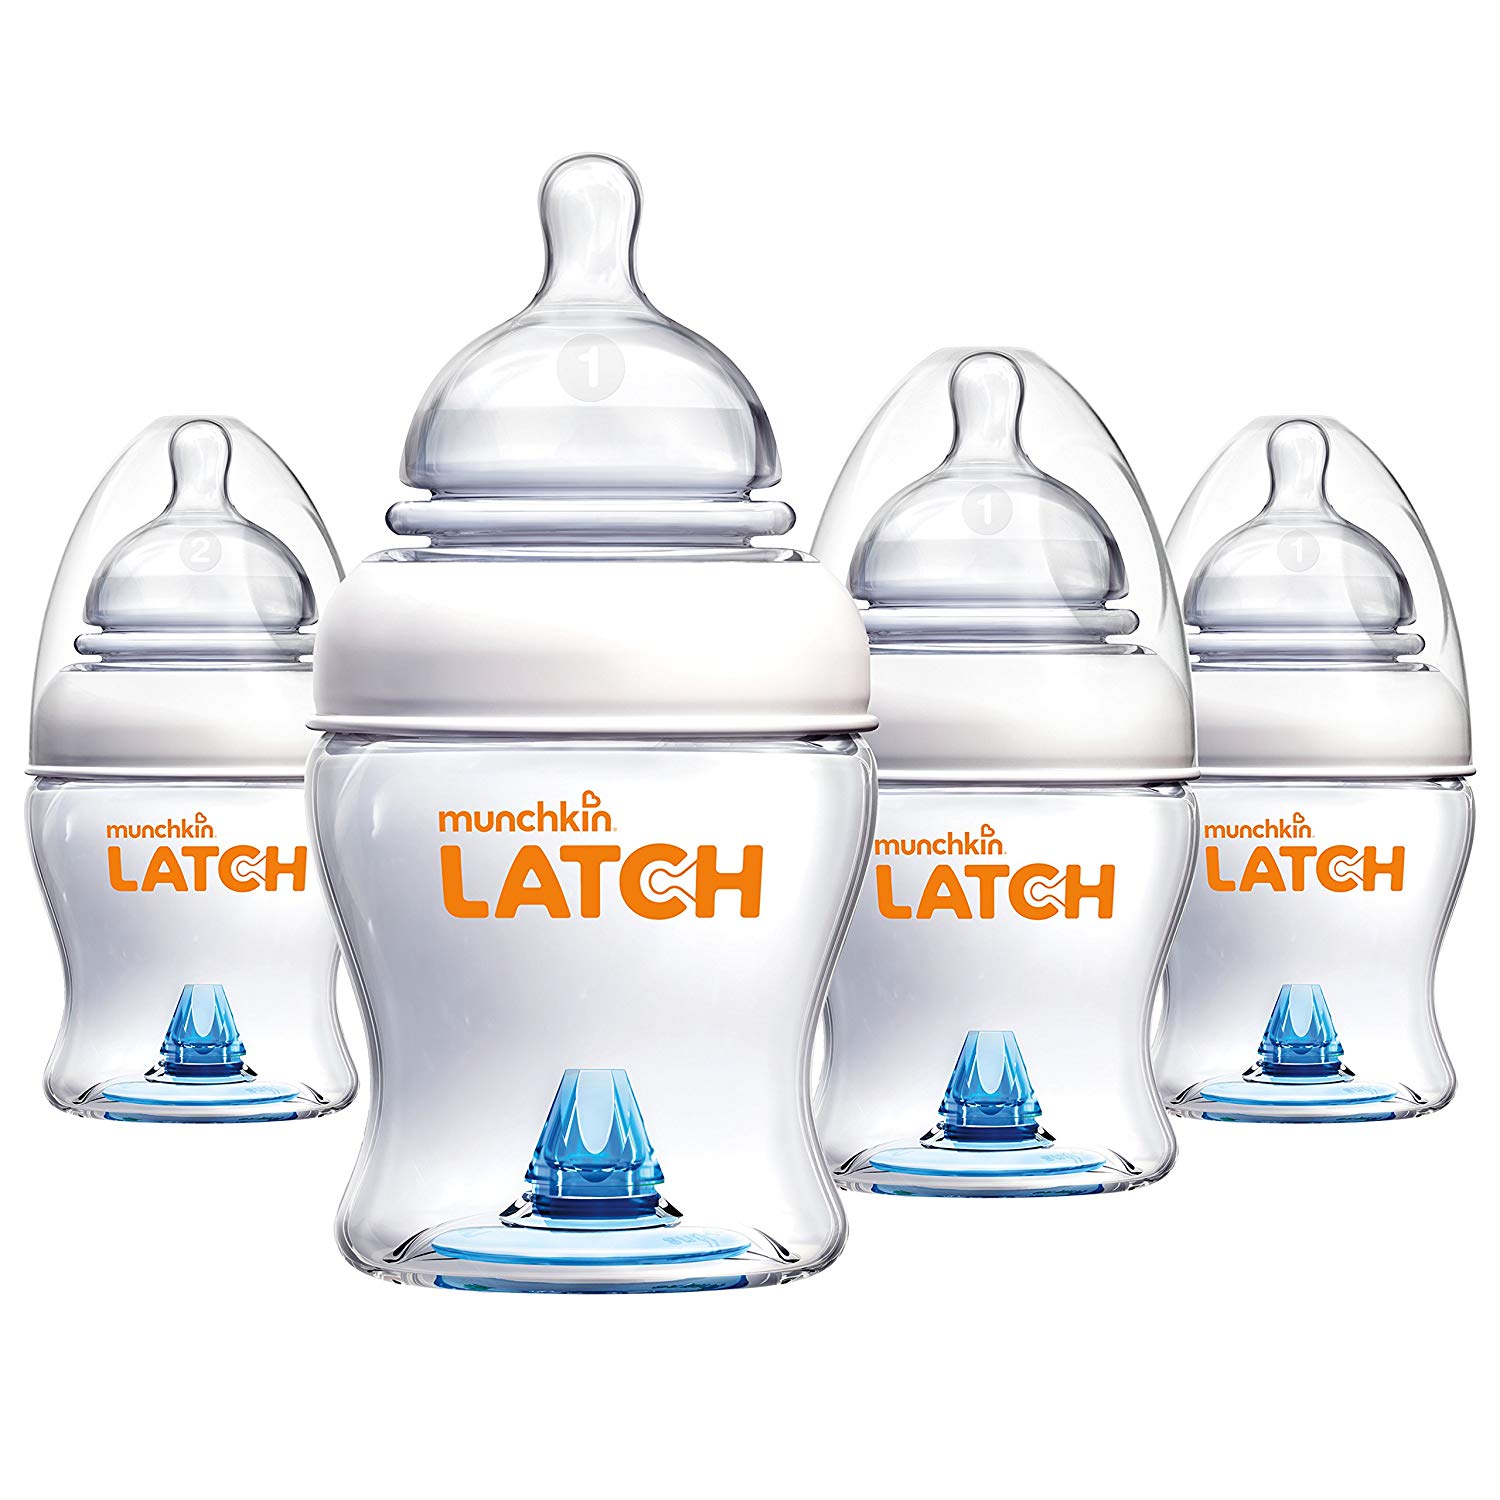 good baby bottle brands